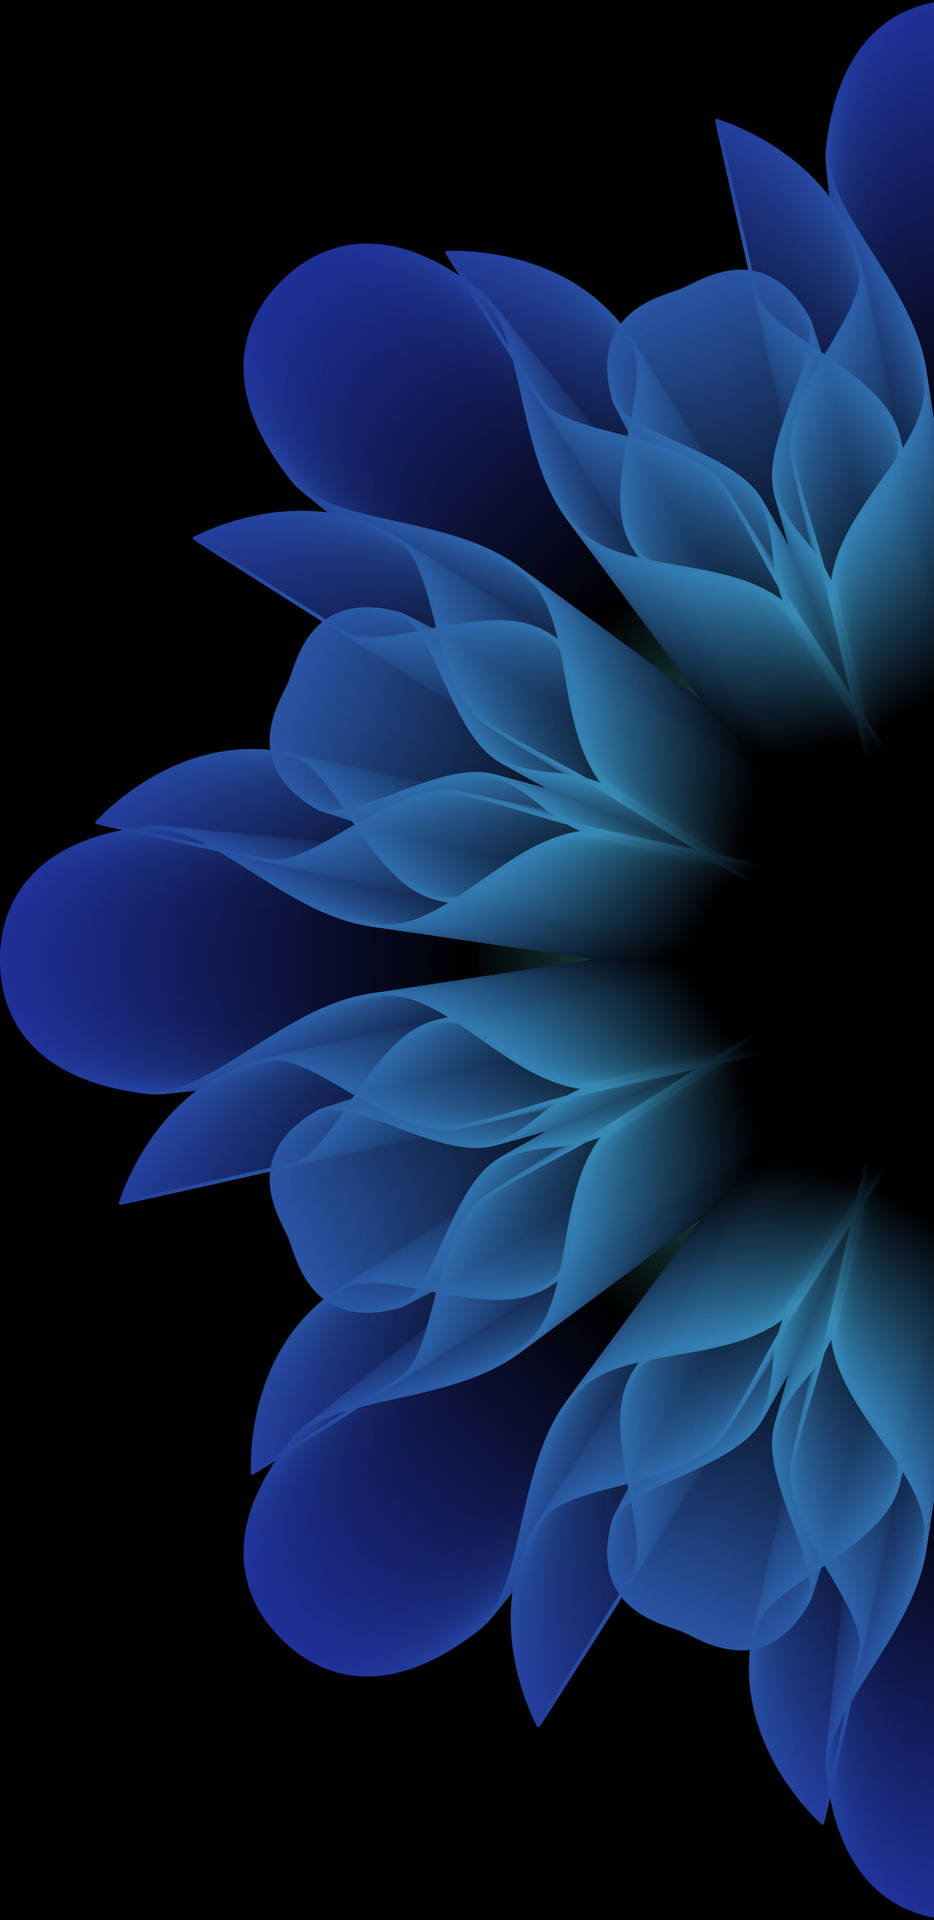 Samsung Galaxy S20 Blue Petals Background